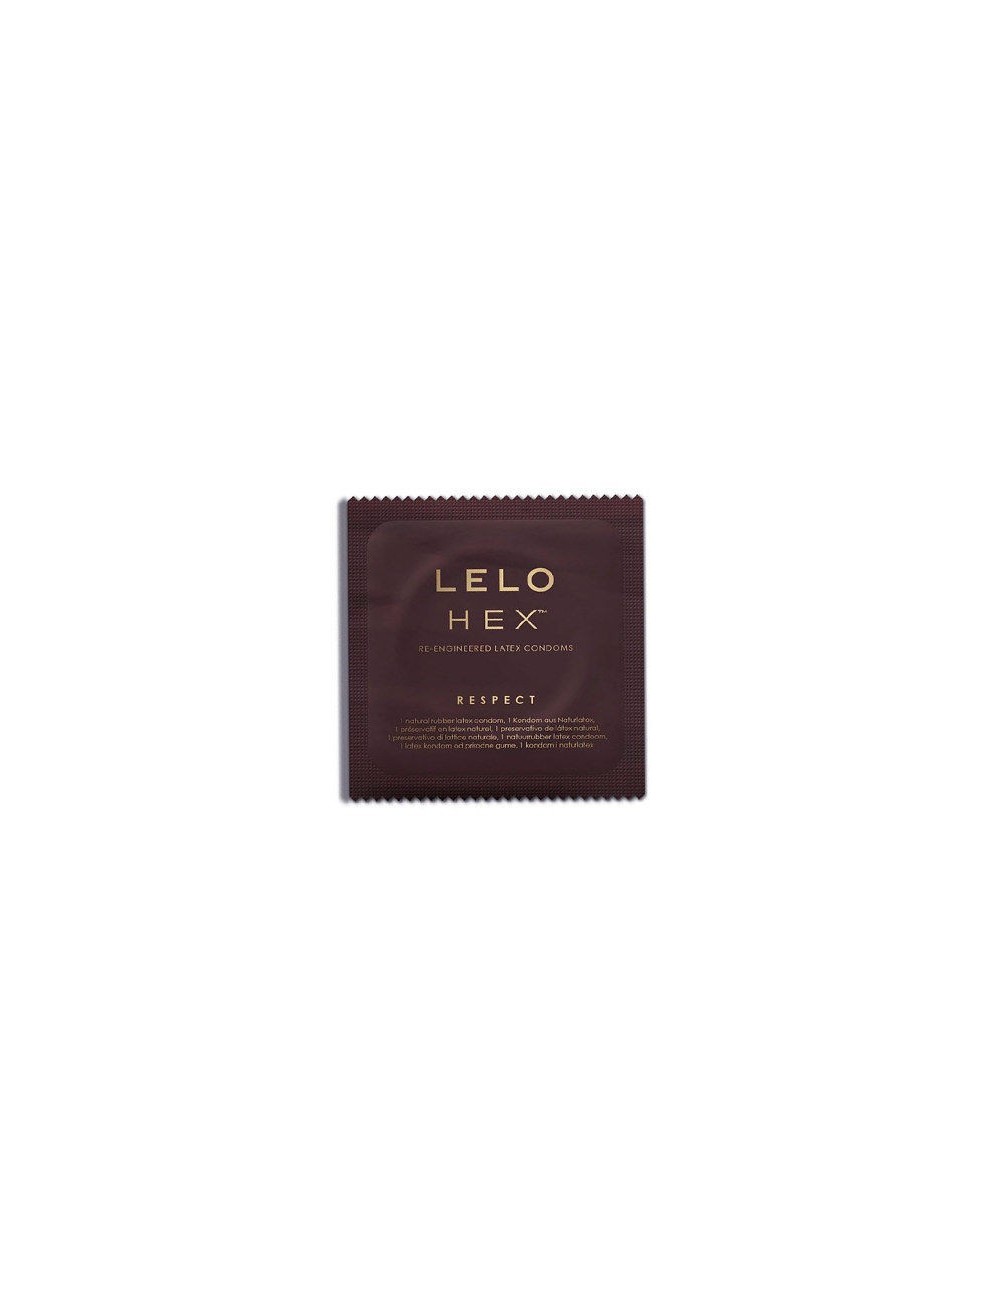 LELO HEX CONDOMS RESPECT XL 36 PACK - Plaisirs Intimes - Lelo